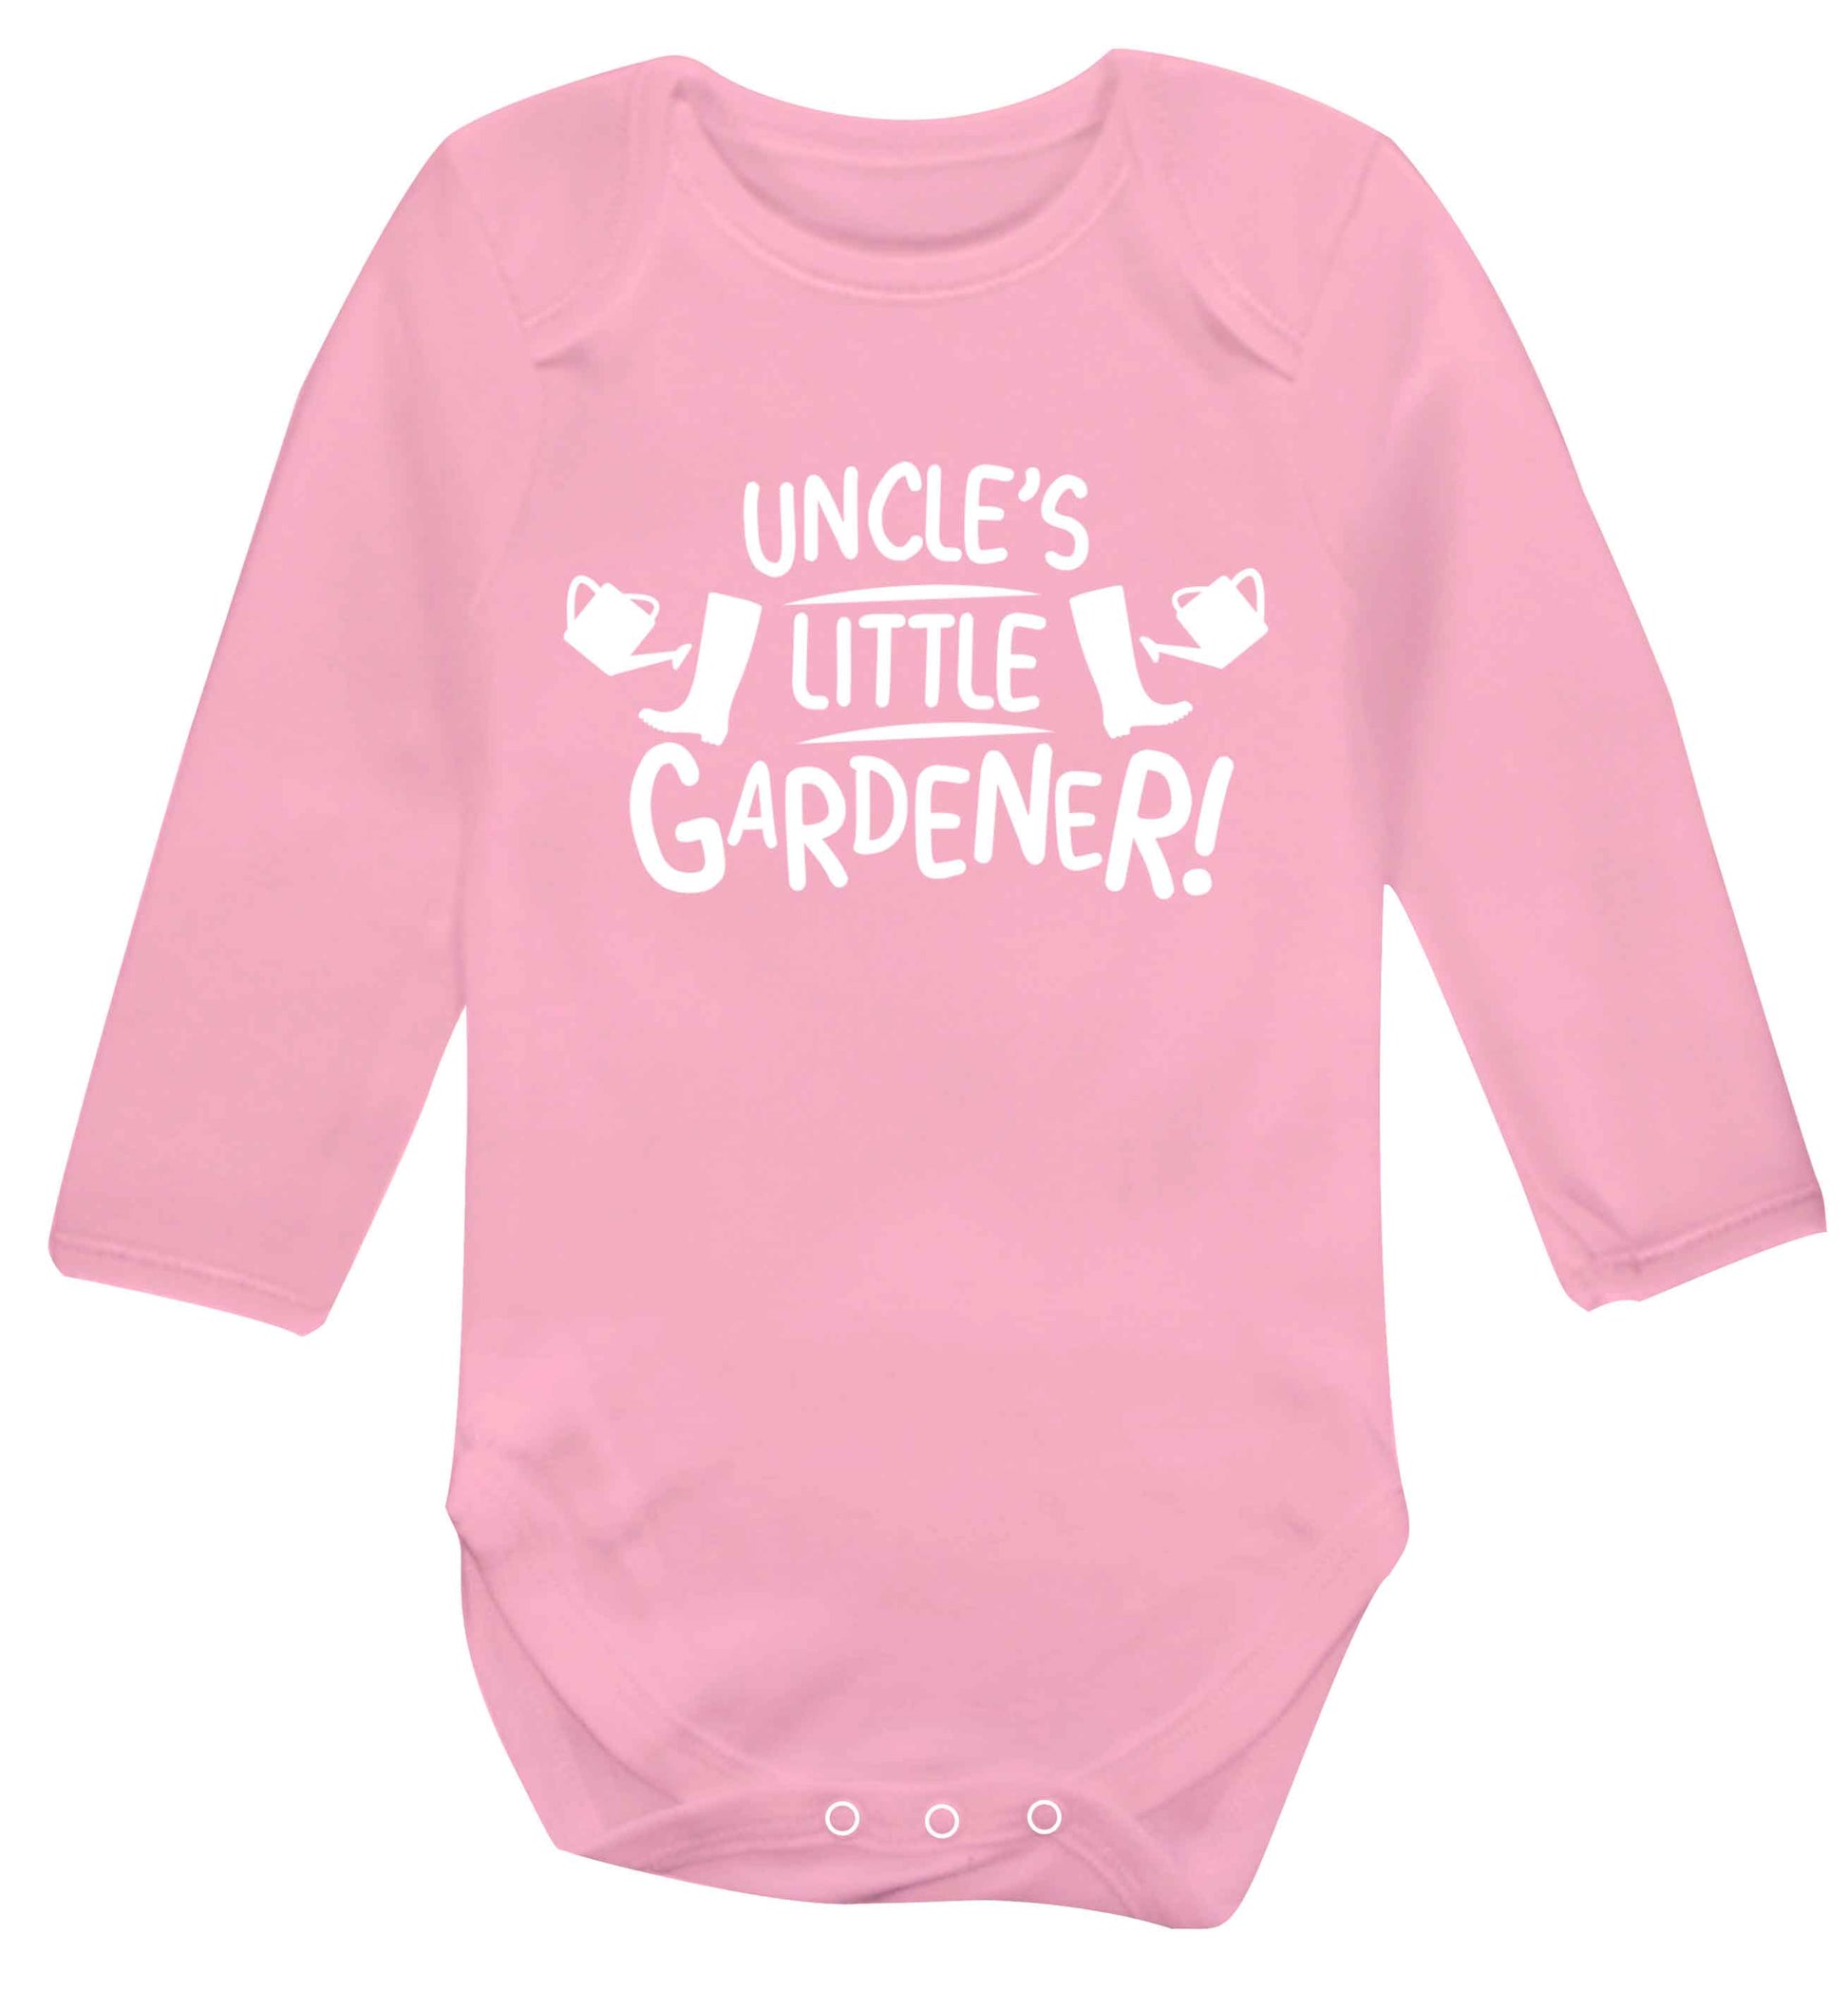 Uncle's little gardener Baby Vest long sleeved pale pink 6-12 months